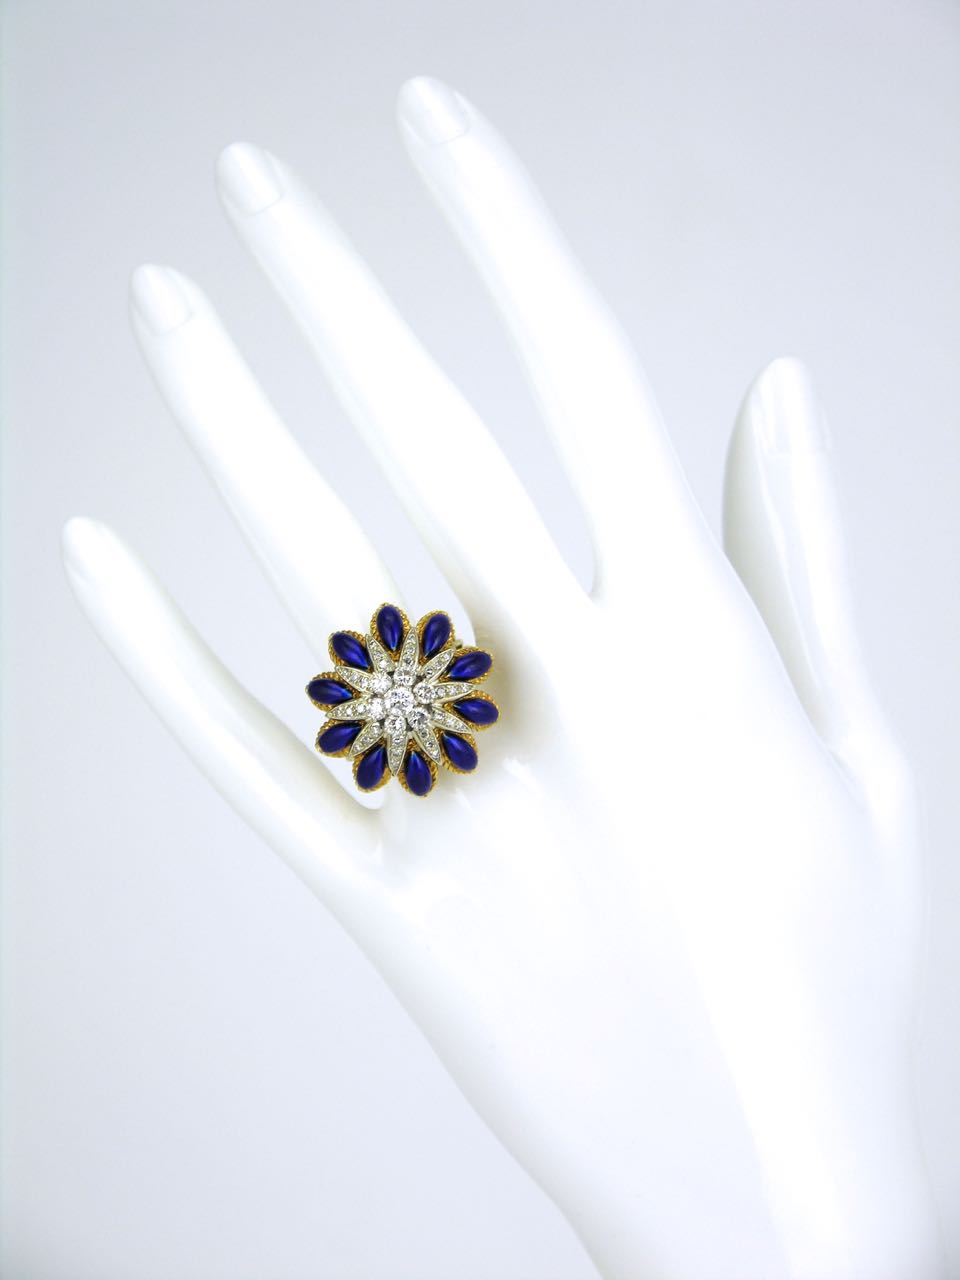 Vintage Italian 18k Yellow Gold Diamond Blue Enamel Flower Starburst Ring 1960s - Corletto